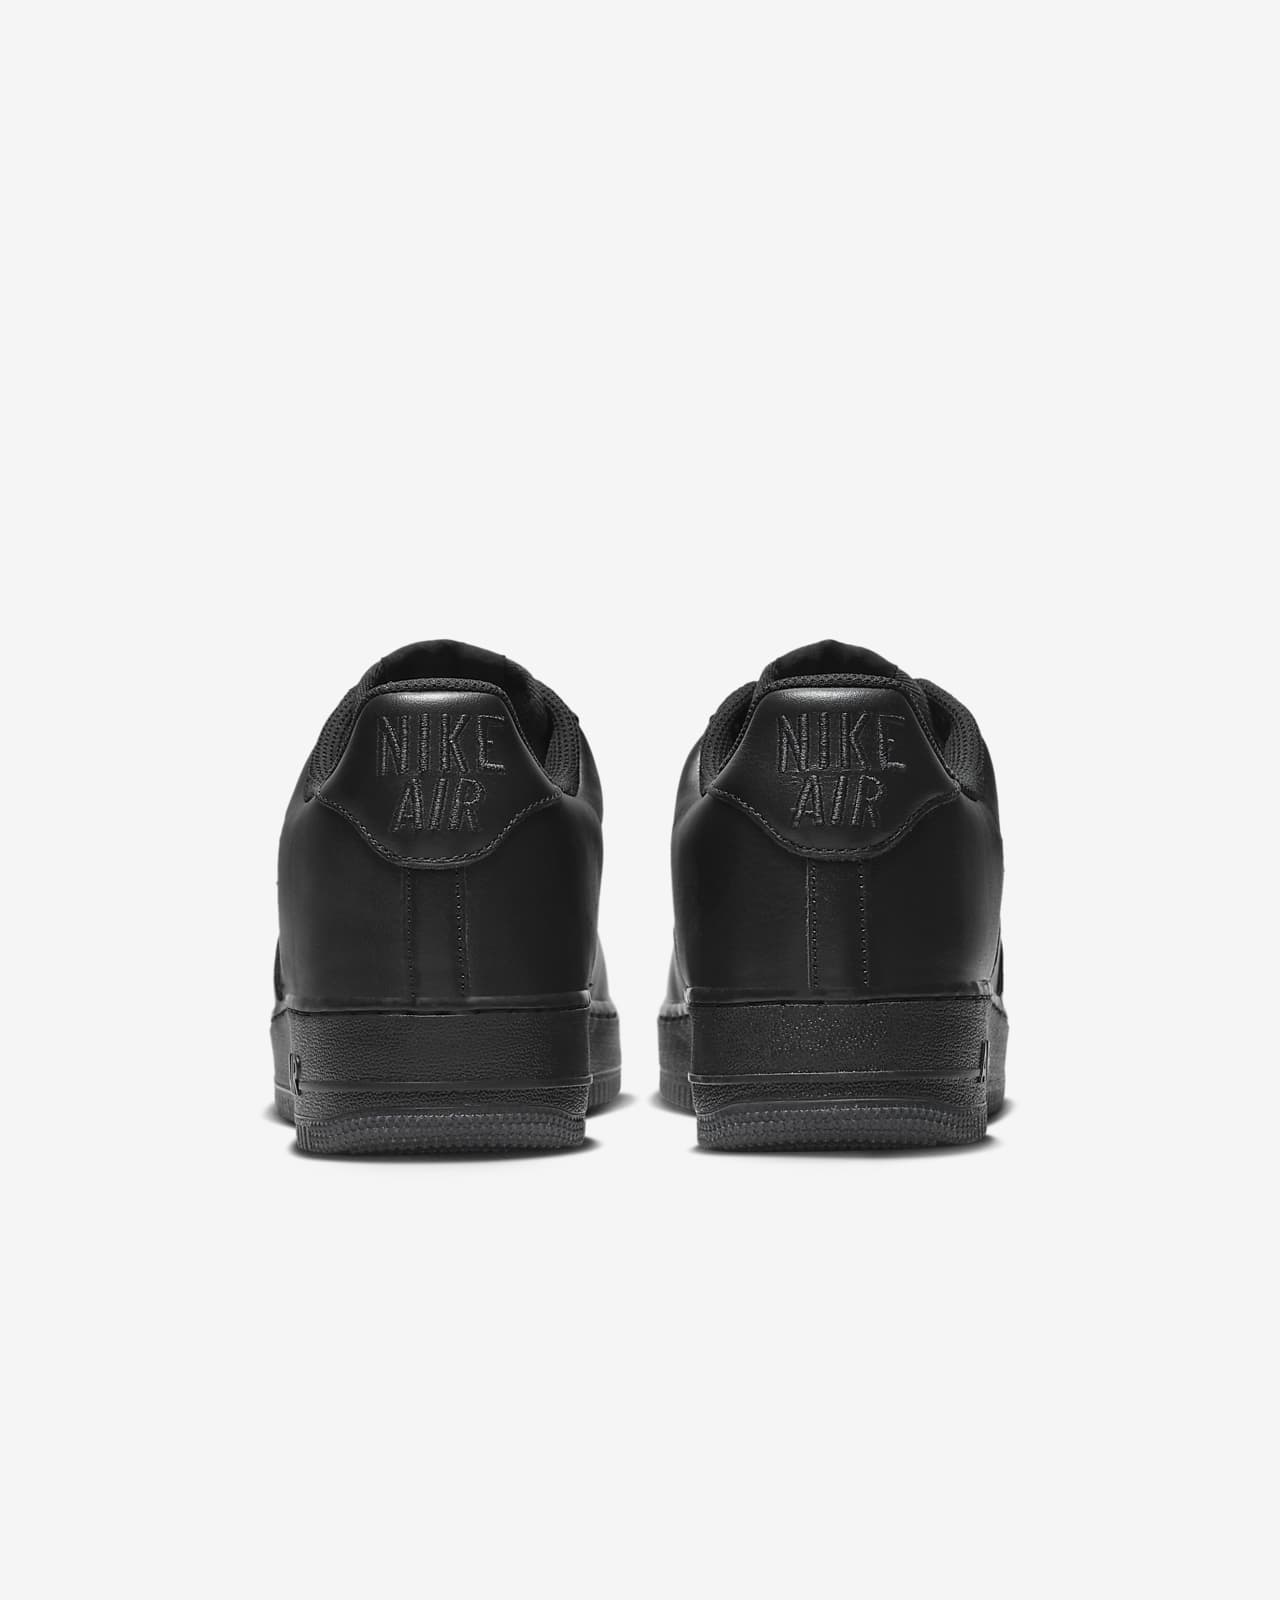 Men's shoes Nike Air Force 1 Low Retro Black/ Black-Black